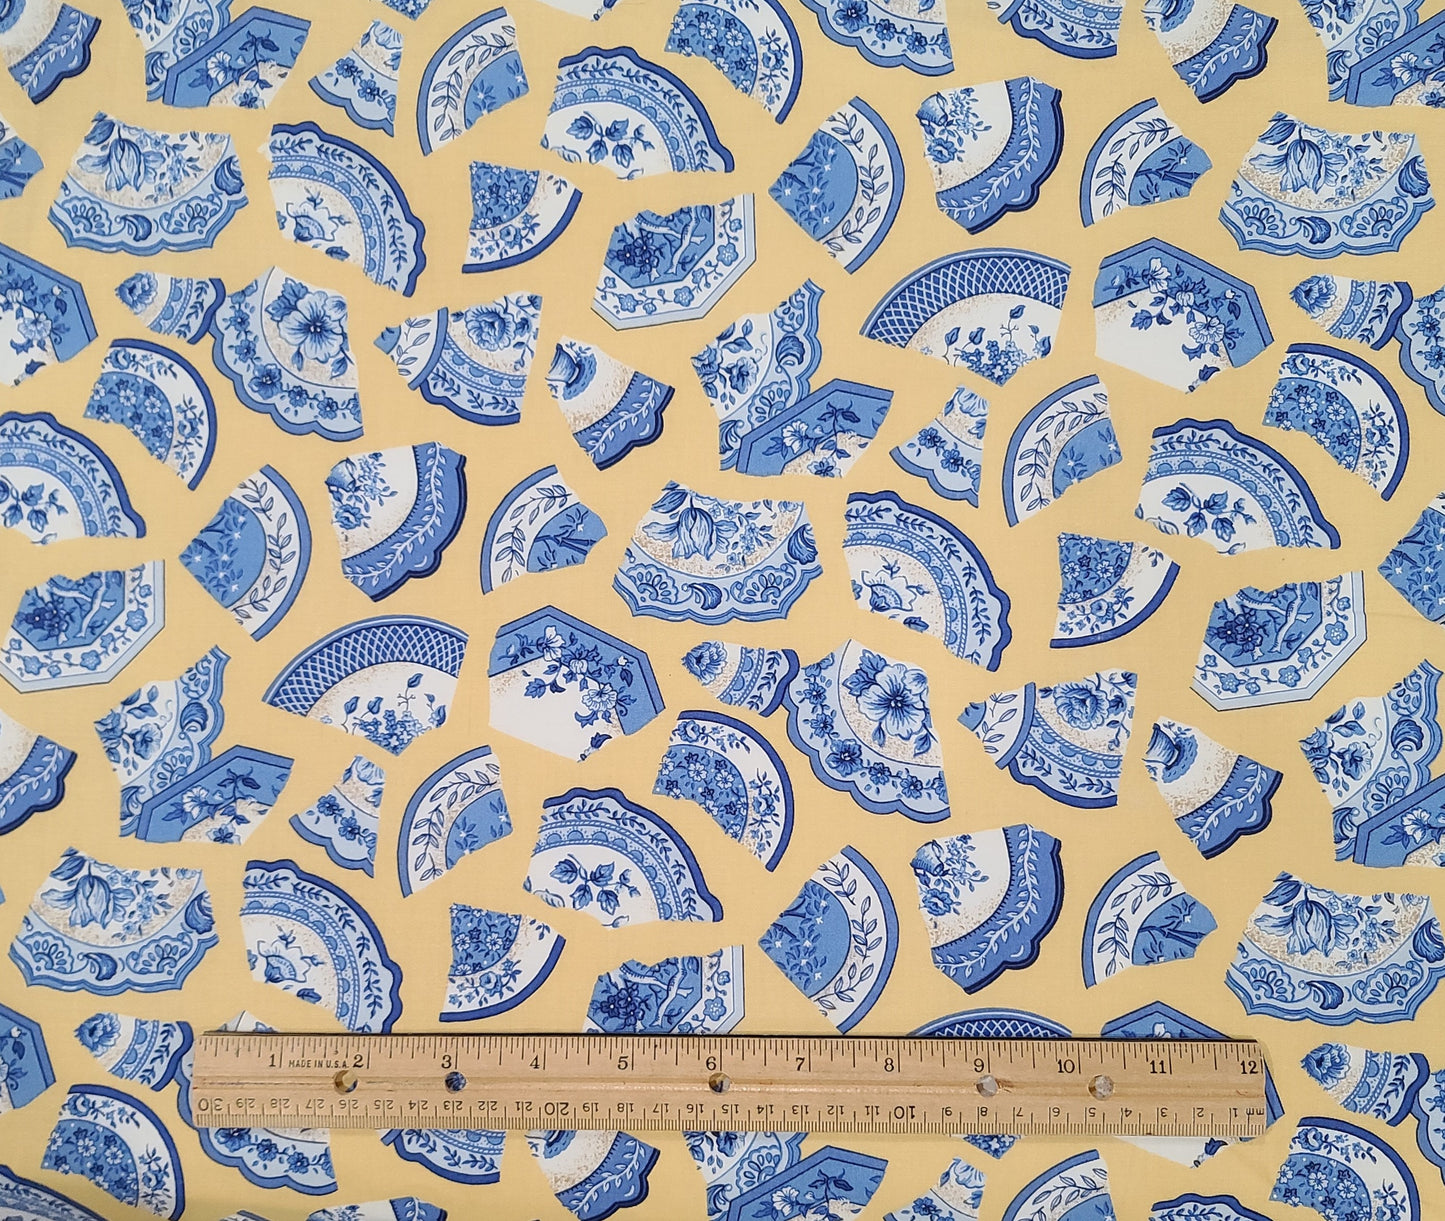 TAF Textiles Art & Film Inc - Light Gold Fabric / Blue and White "Delft" Pattern Broken Plate Print